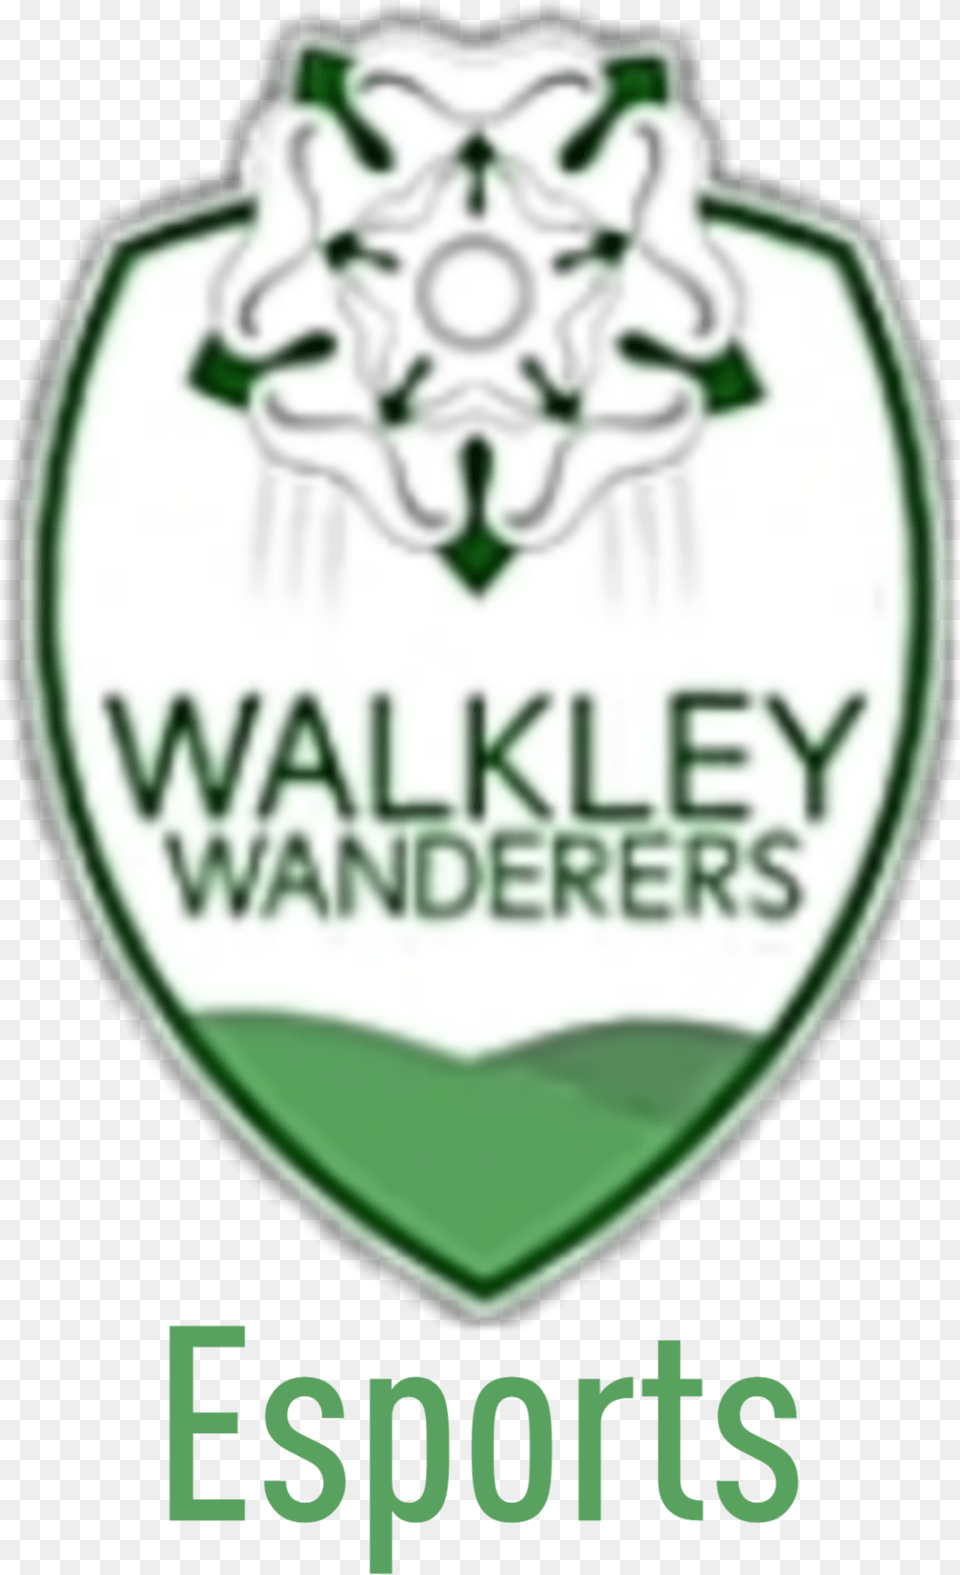 Made An Esports Logo For Walkley Alaska Statehood, Badge, Symbol Free Png Download